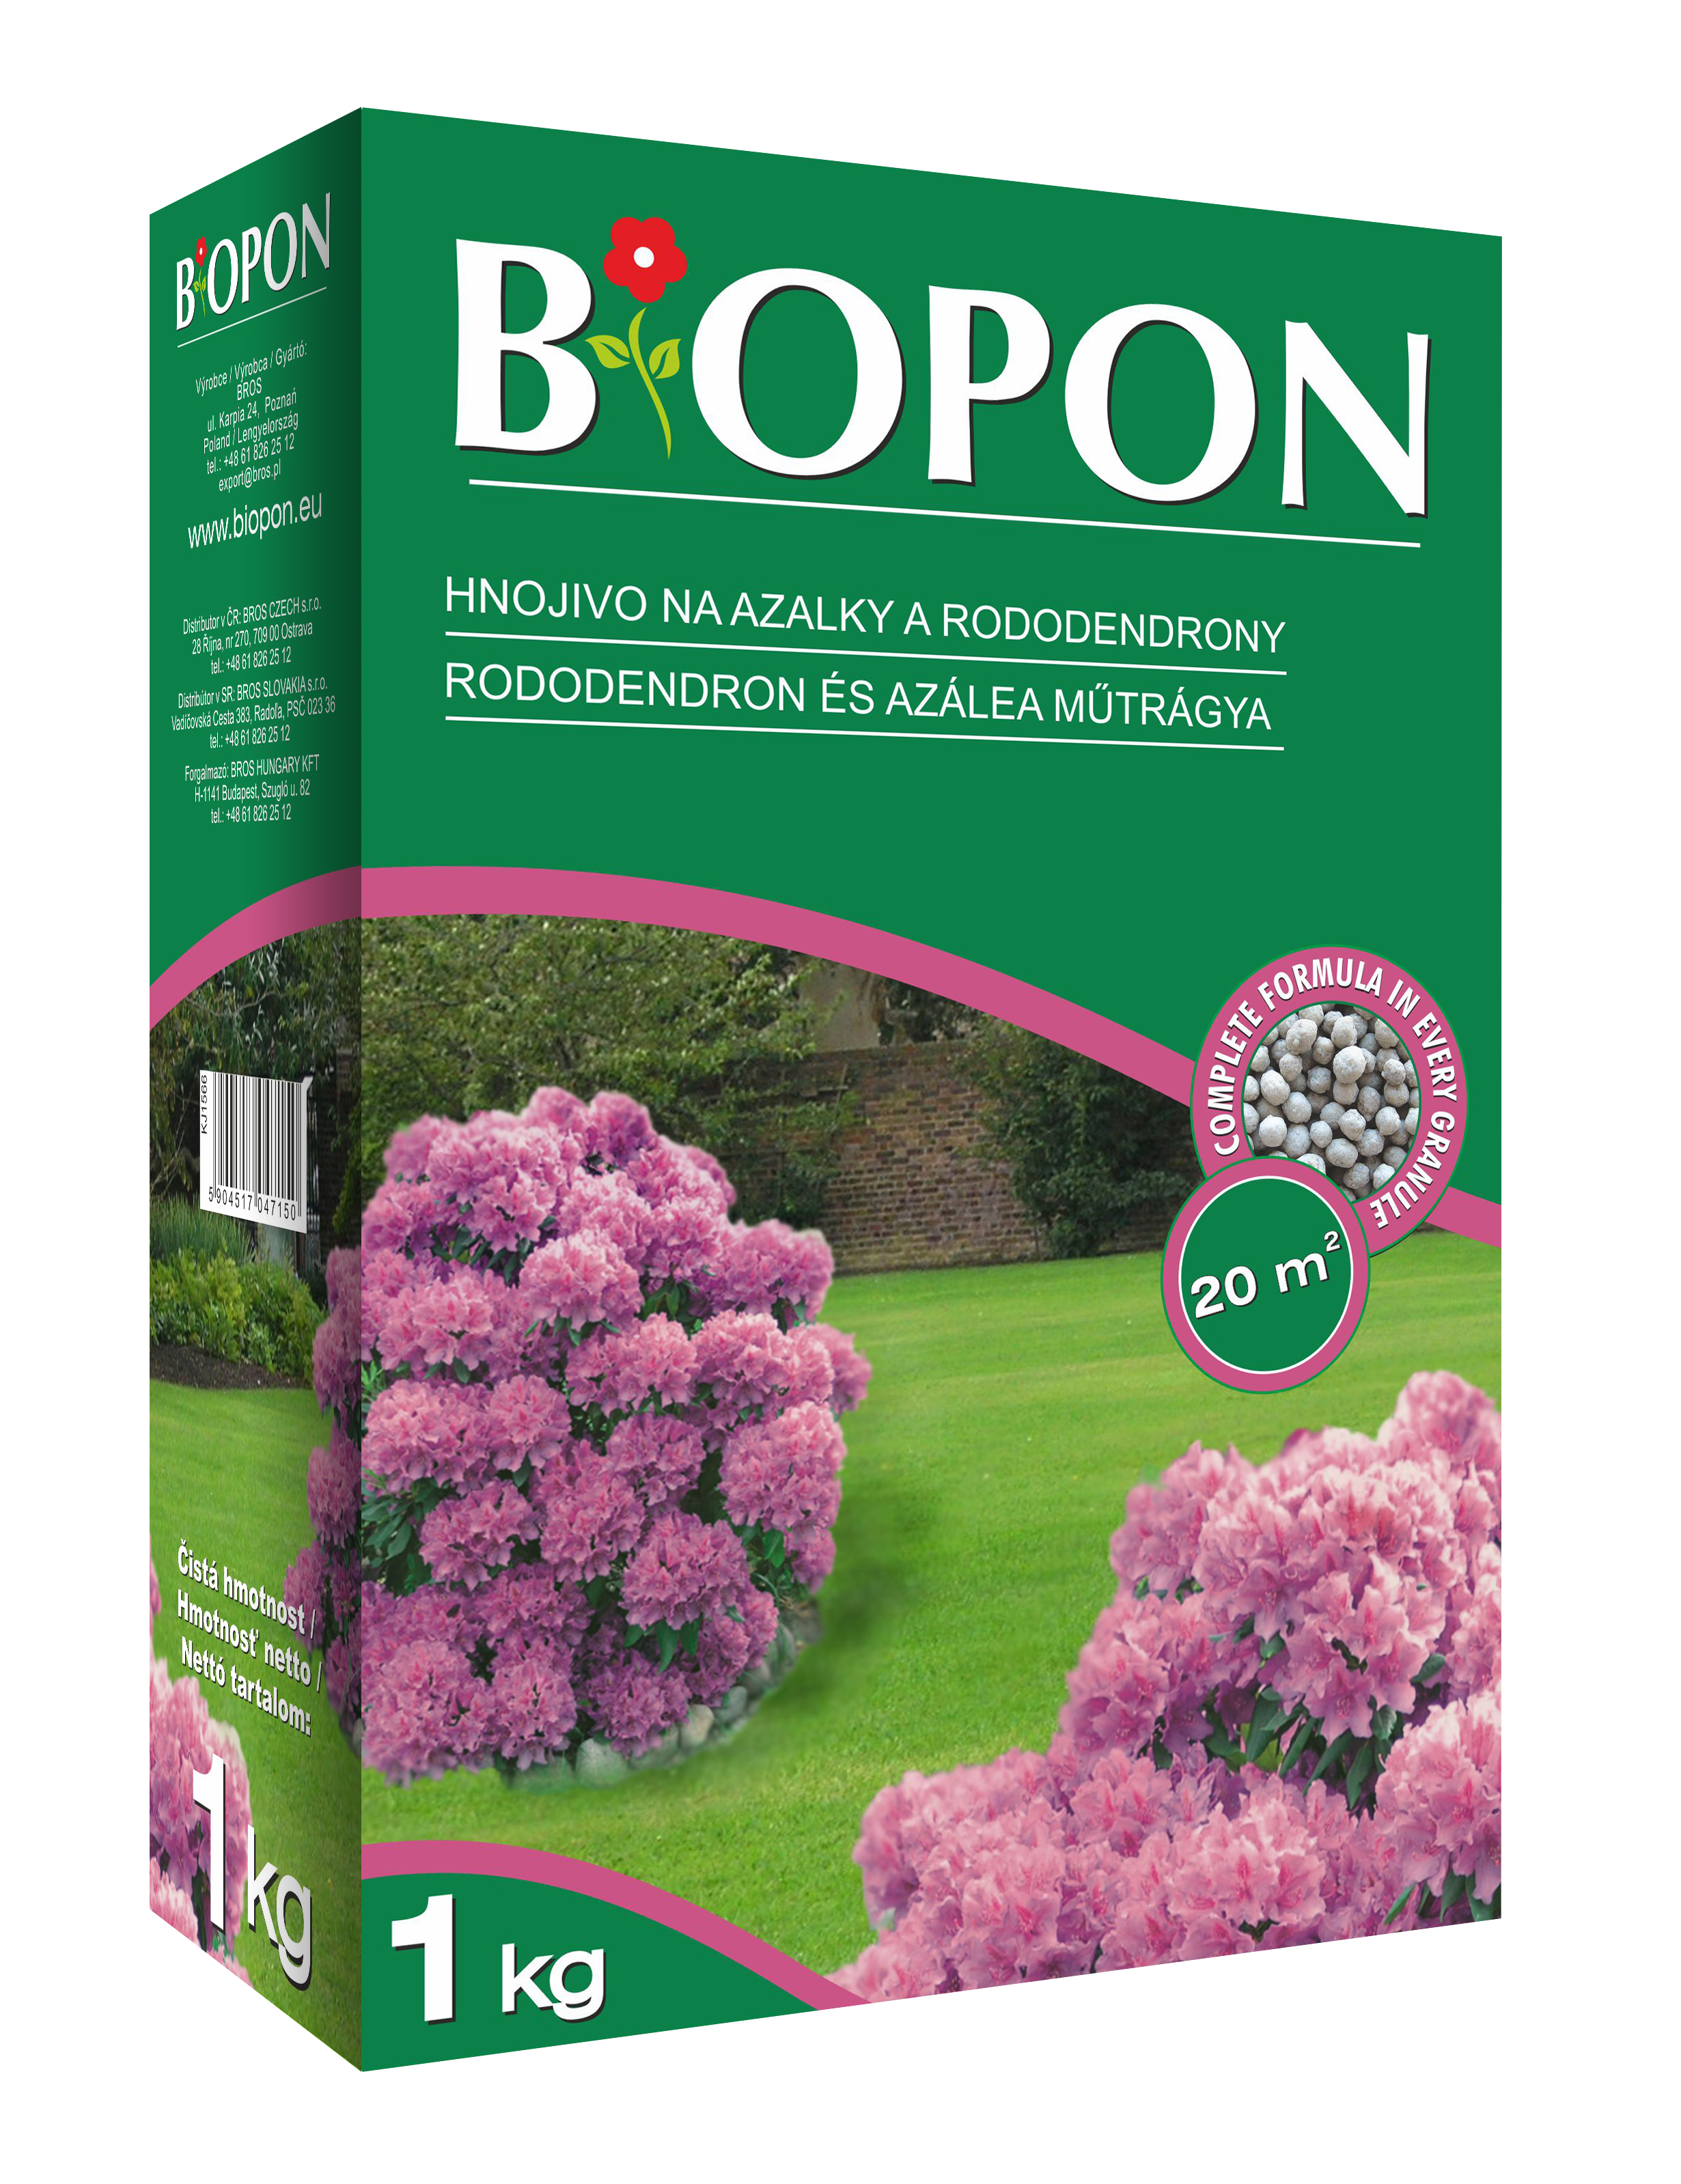 Biopon fertilizer for rhododendron 1 kg